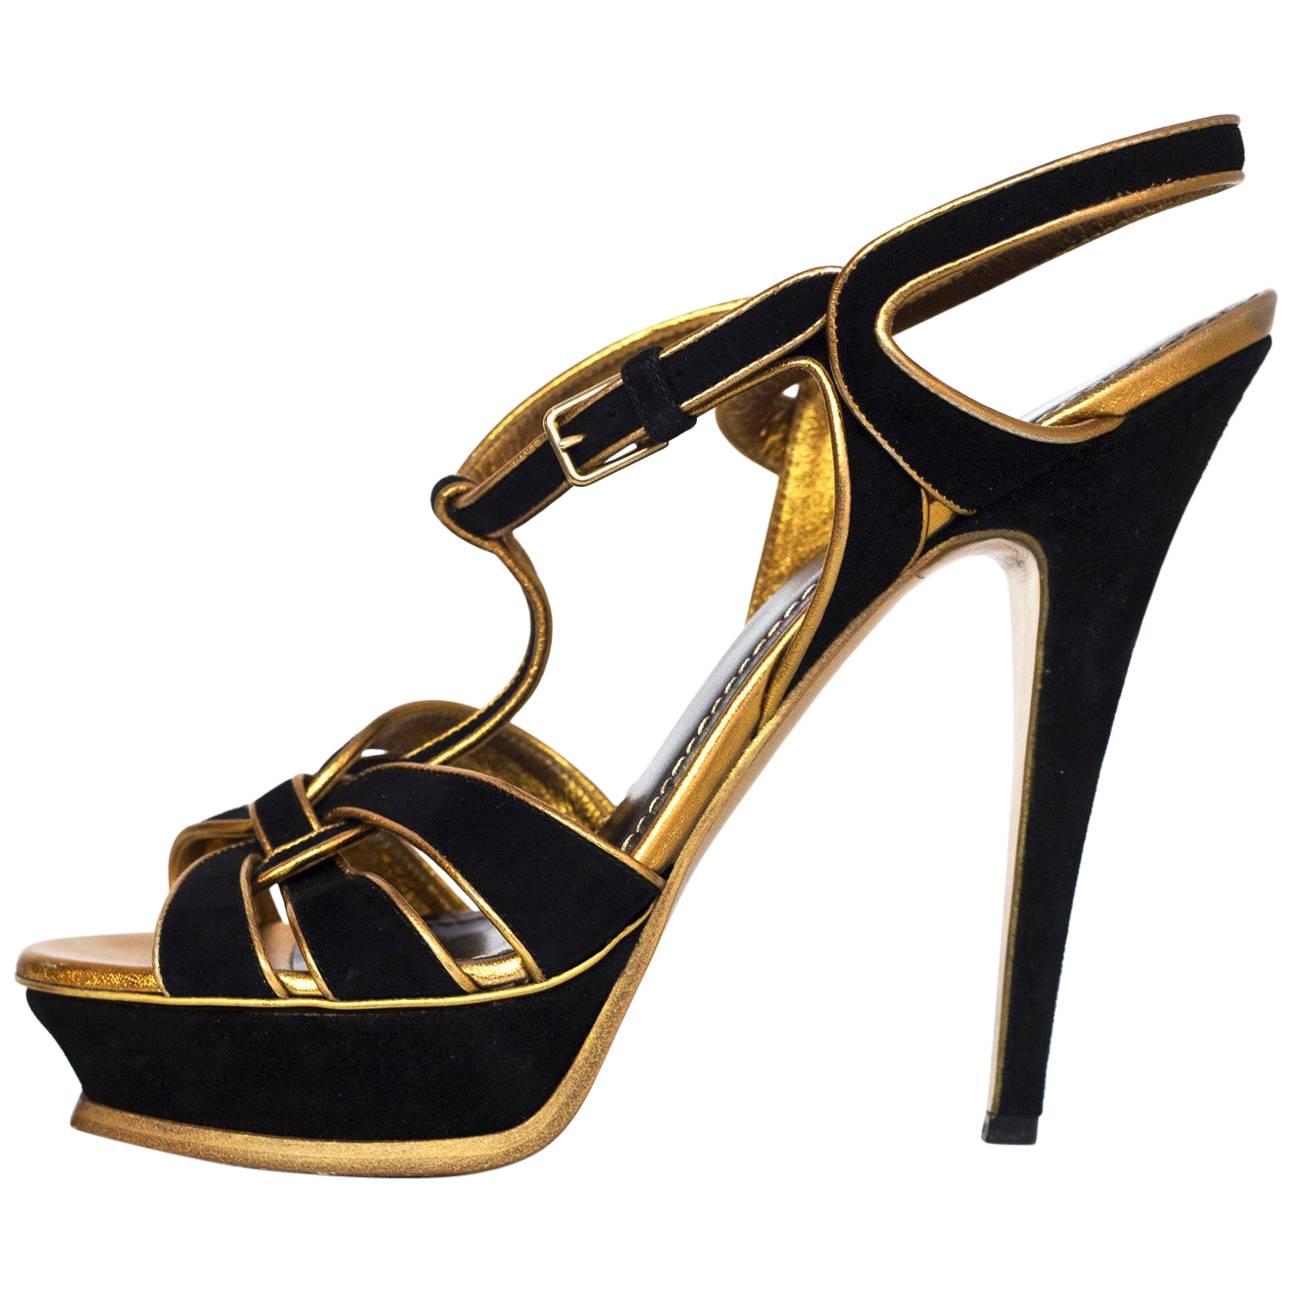 Yves Saint Laurent Black and Gold SuedeTribute 105 Sandals Sz 39.5